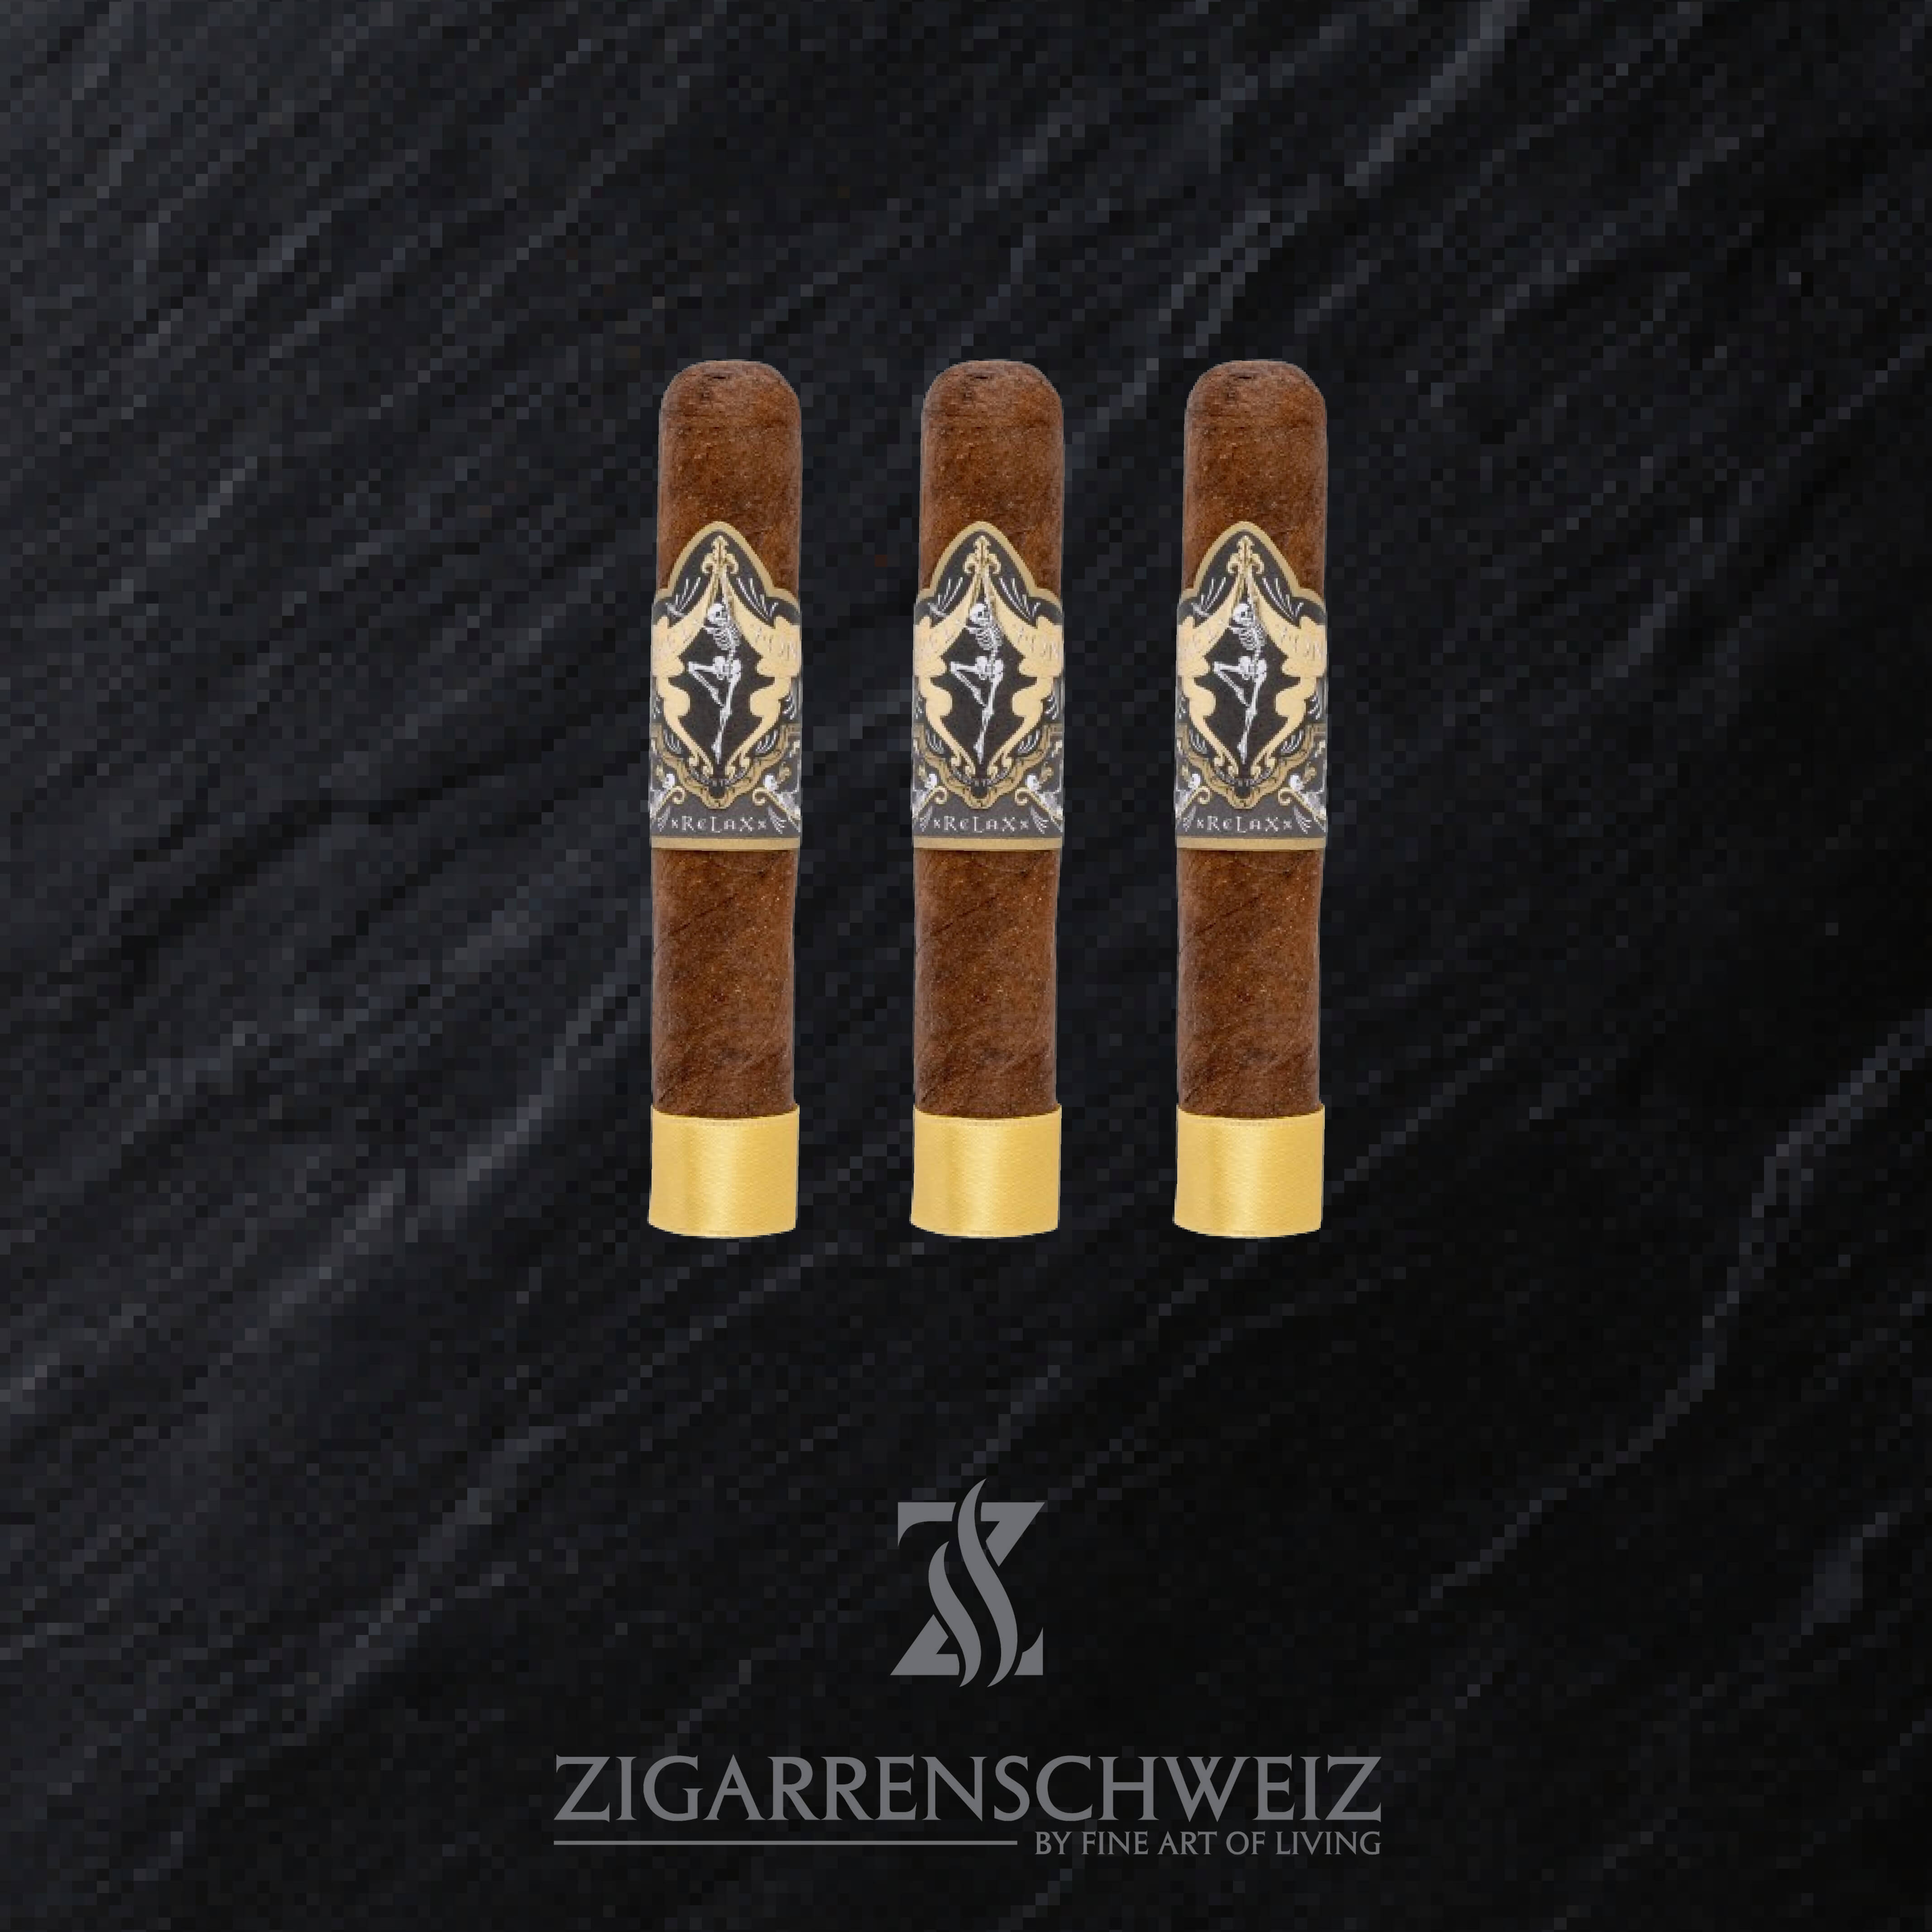 Skel Ton x RELAX x Robusto Zigarren 3er Etui von Zigarren Etui